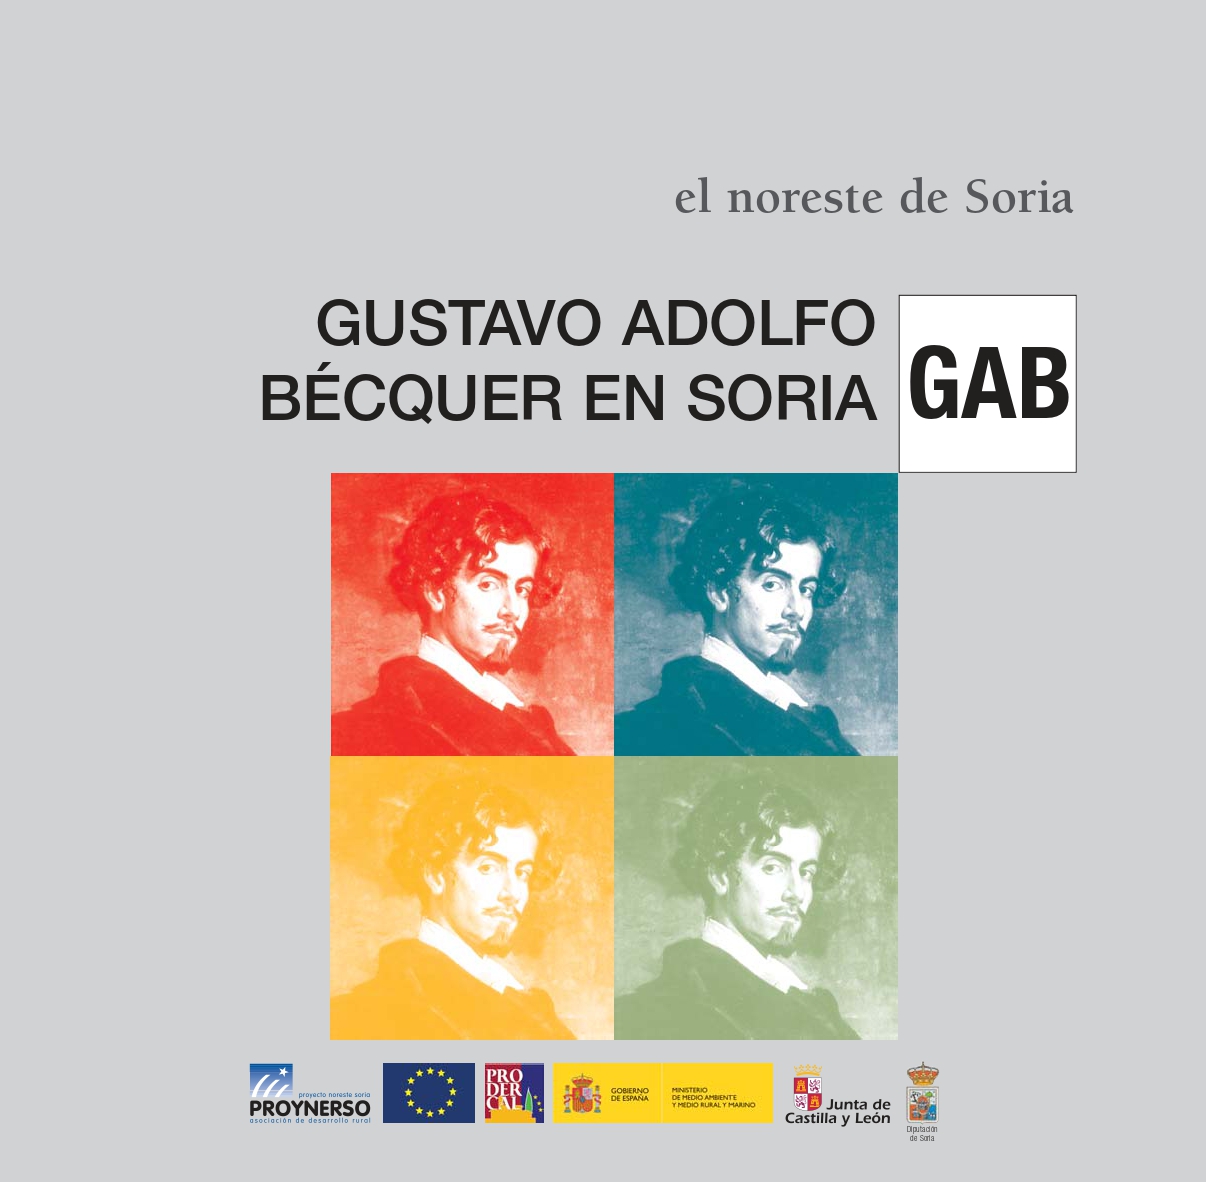 Gustavo Adolfo Bécquer en Soria